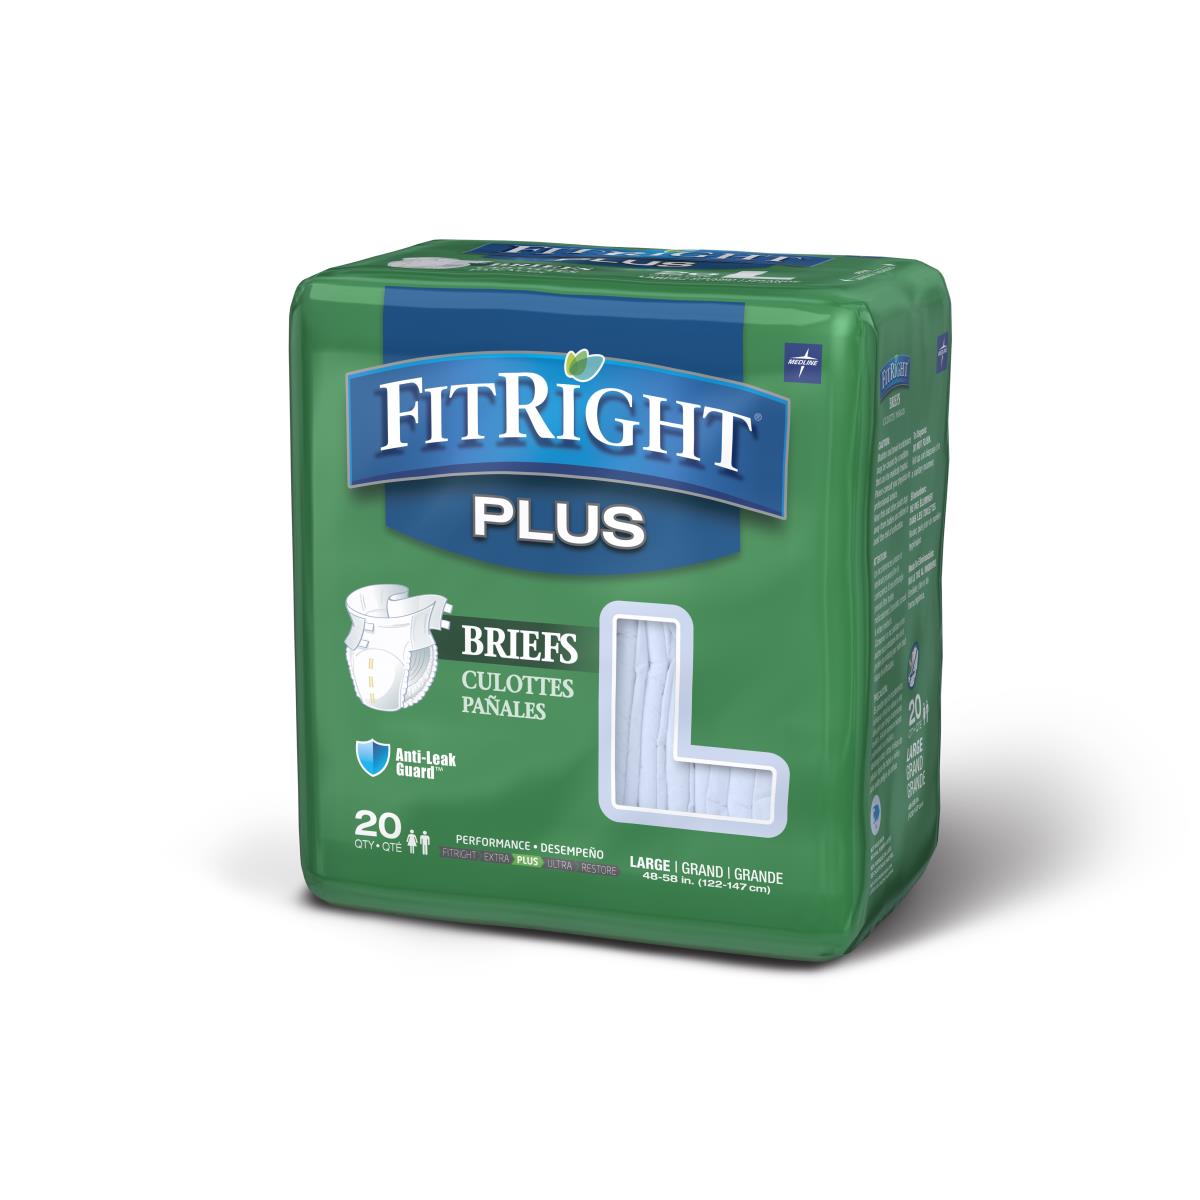 Medline FitRight Plus Brief Size L 80/cs FITPLUSLG